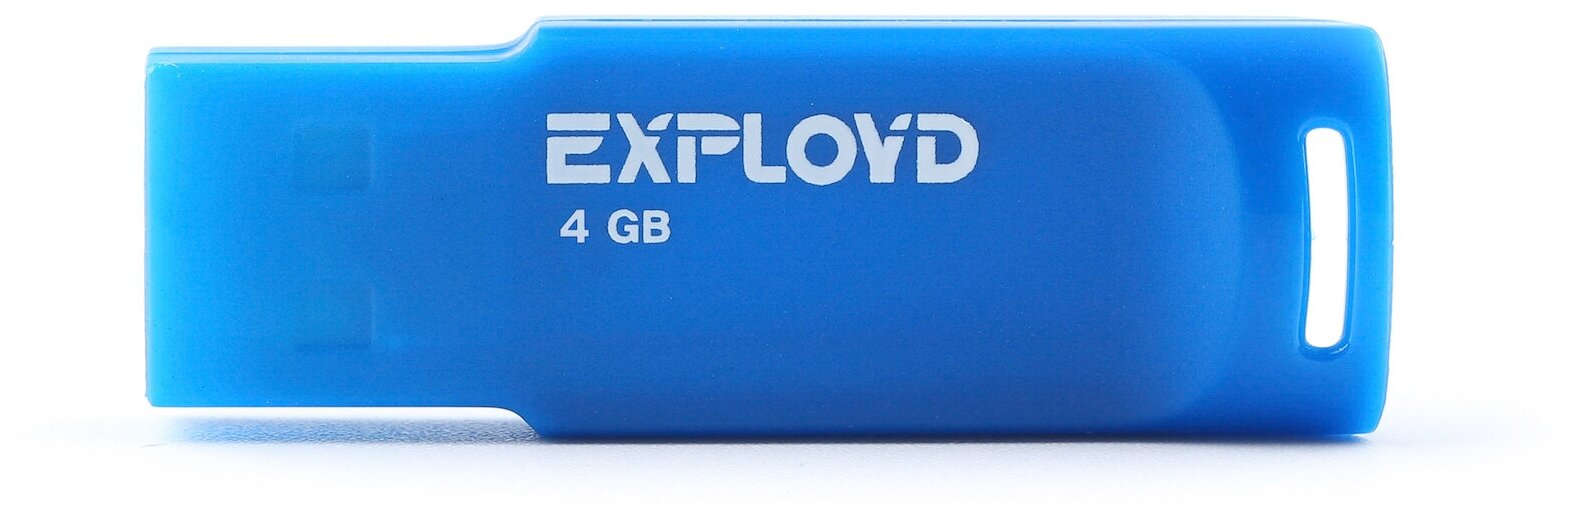 USB Flash Drive 4Gb - Exployd 560 Blue EX-4GB-560-Blue